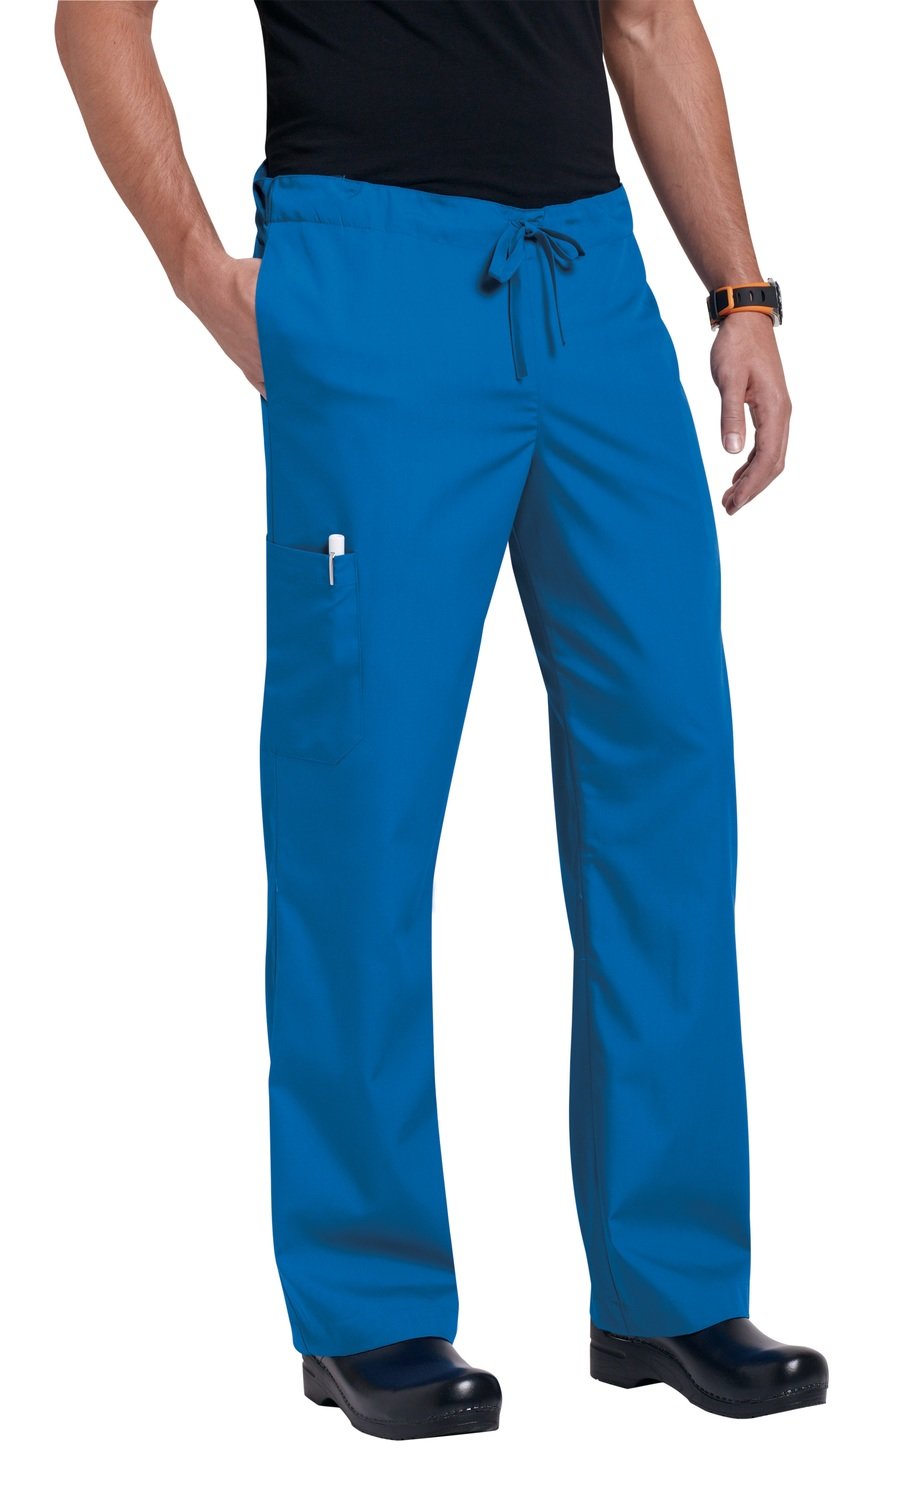 Pantalone ORANGE HUNTINGTON Colore 20. Royal Blue